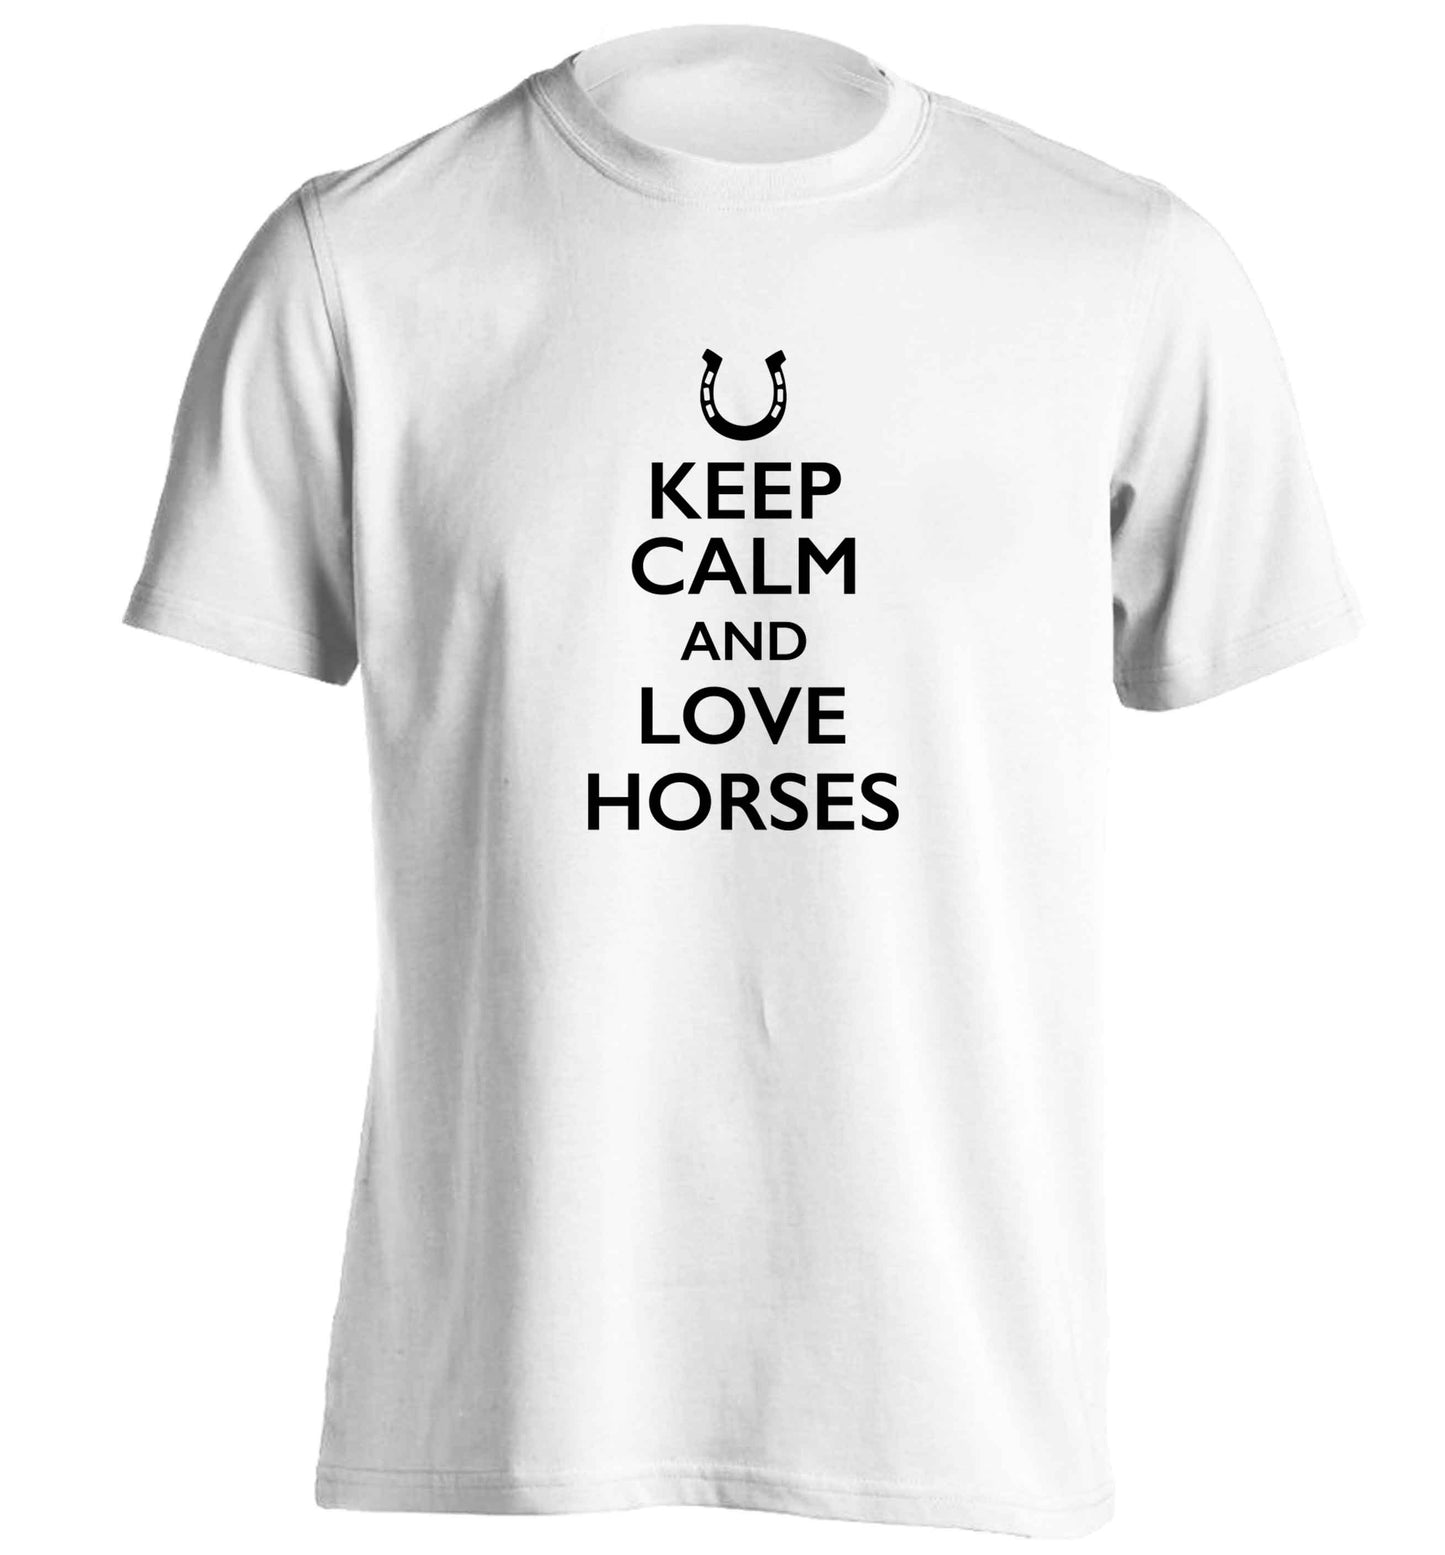 Keep calm and love horses adults unisex white Tshirt 2XL